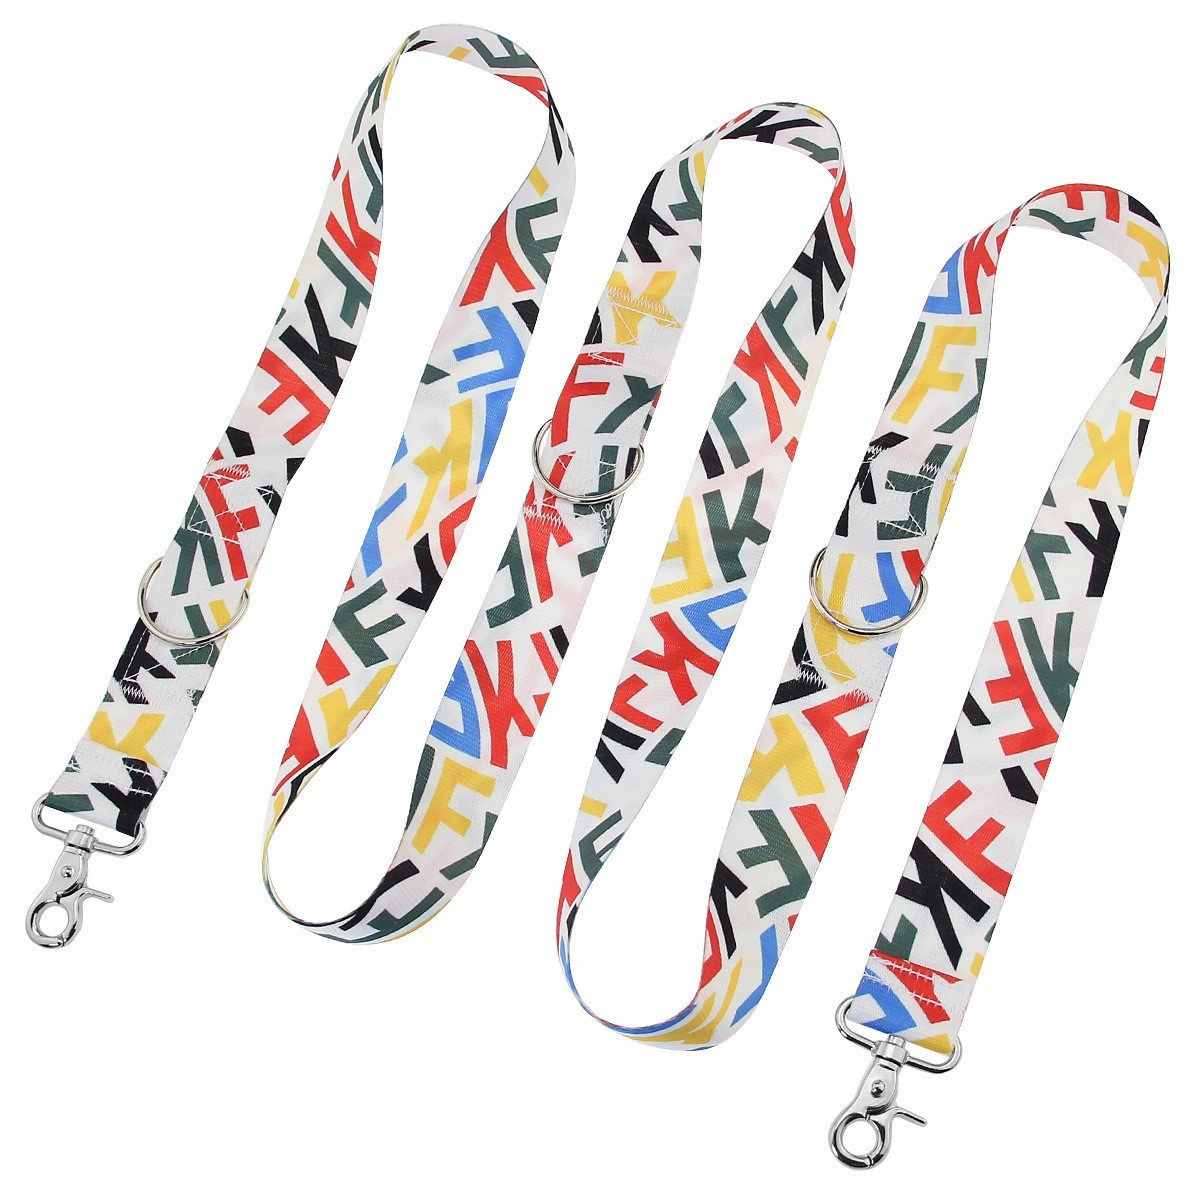  dog chain collar and leash